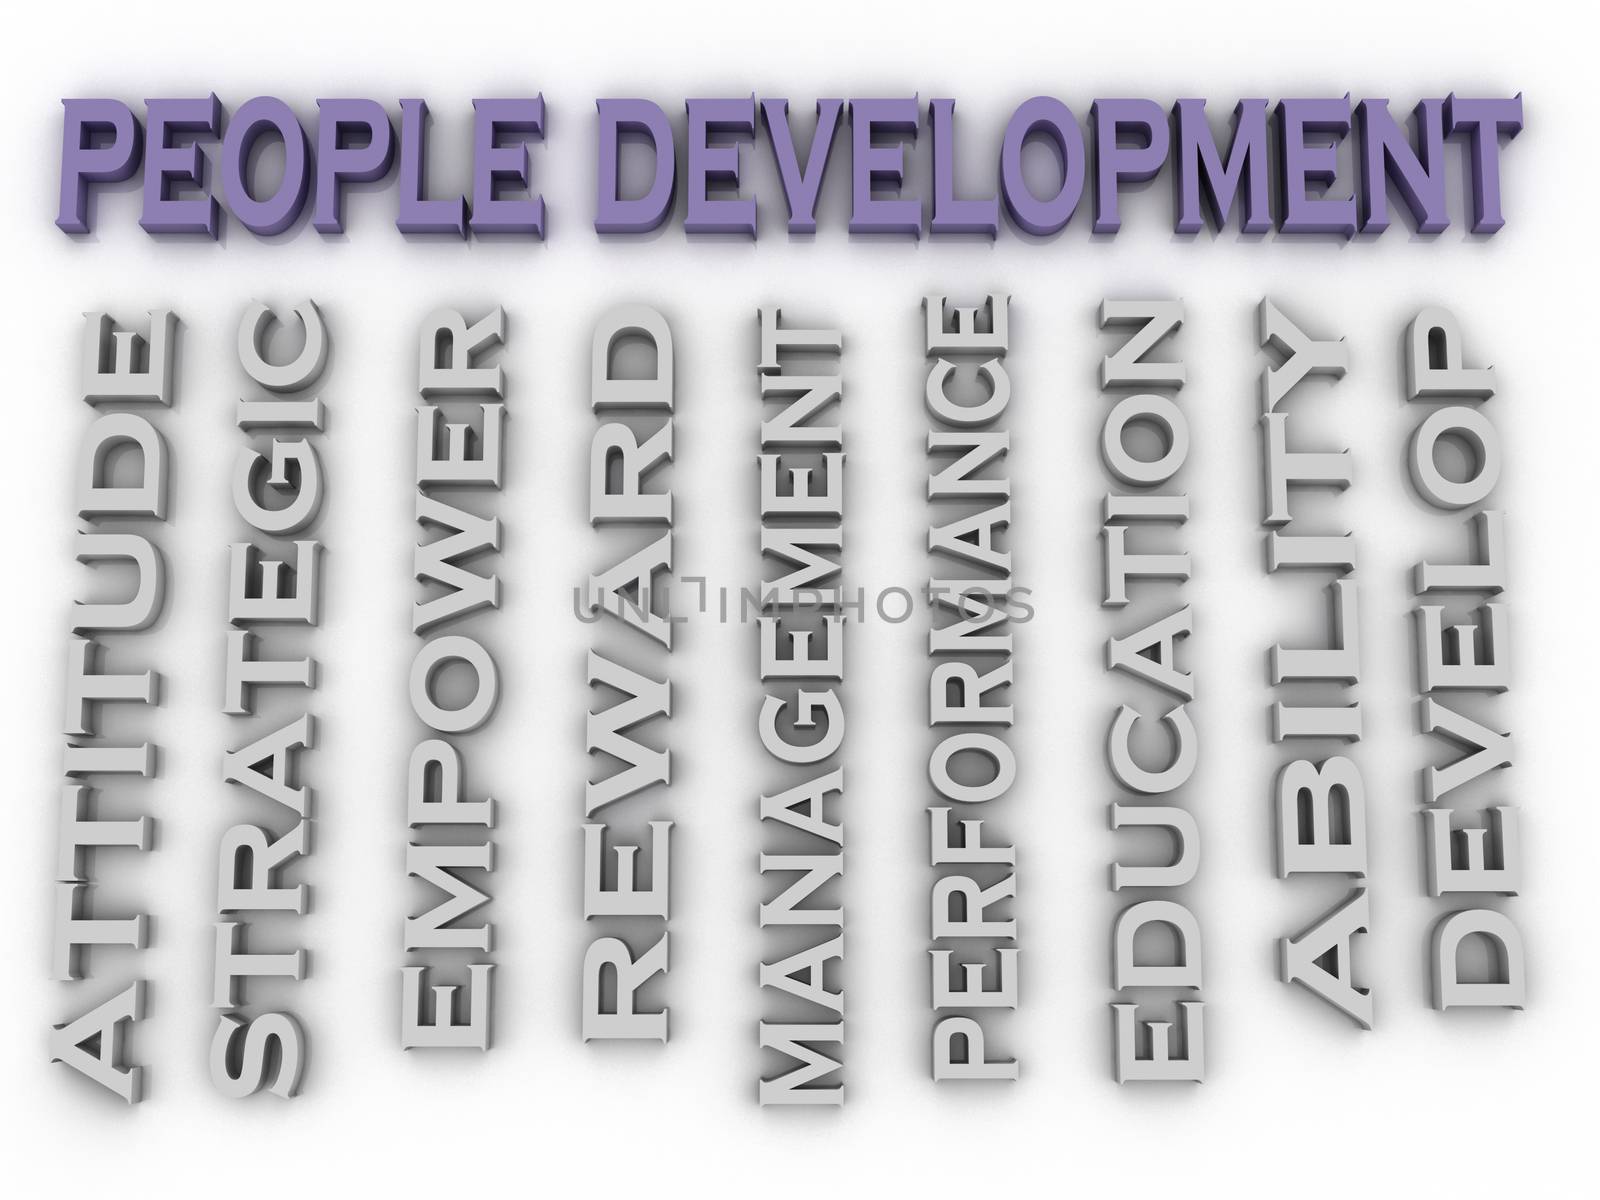 3d image People development issues concept word cloud backgrou by dacasdo